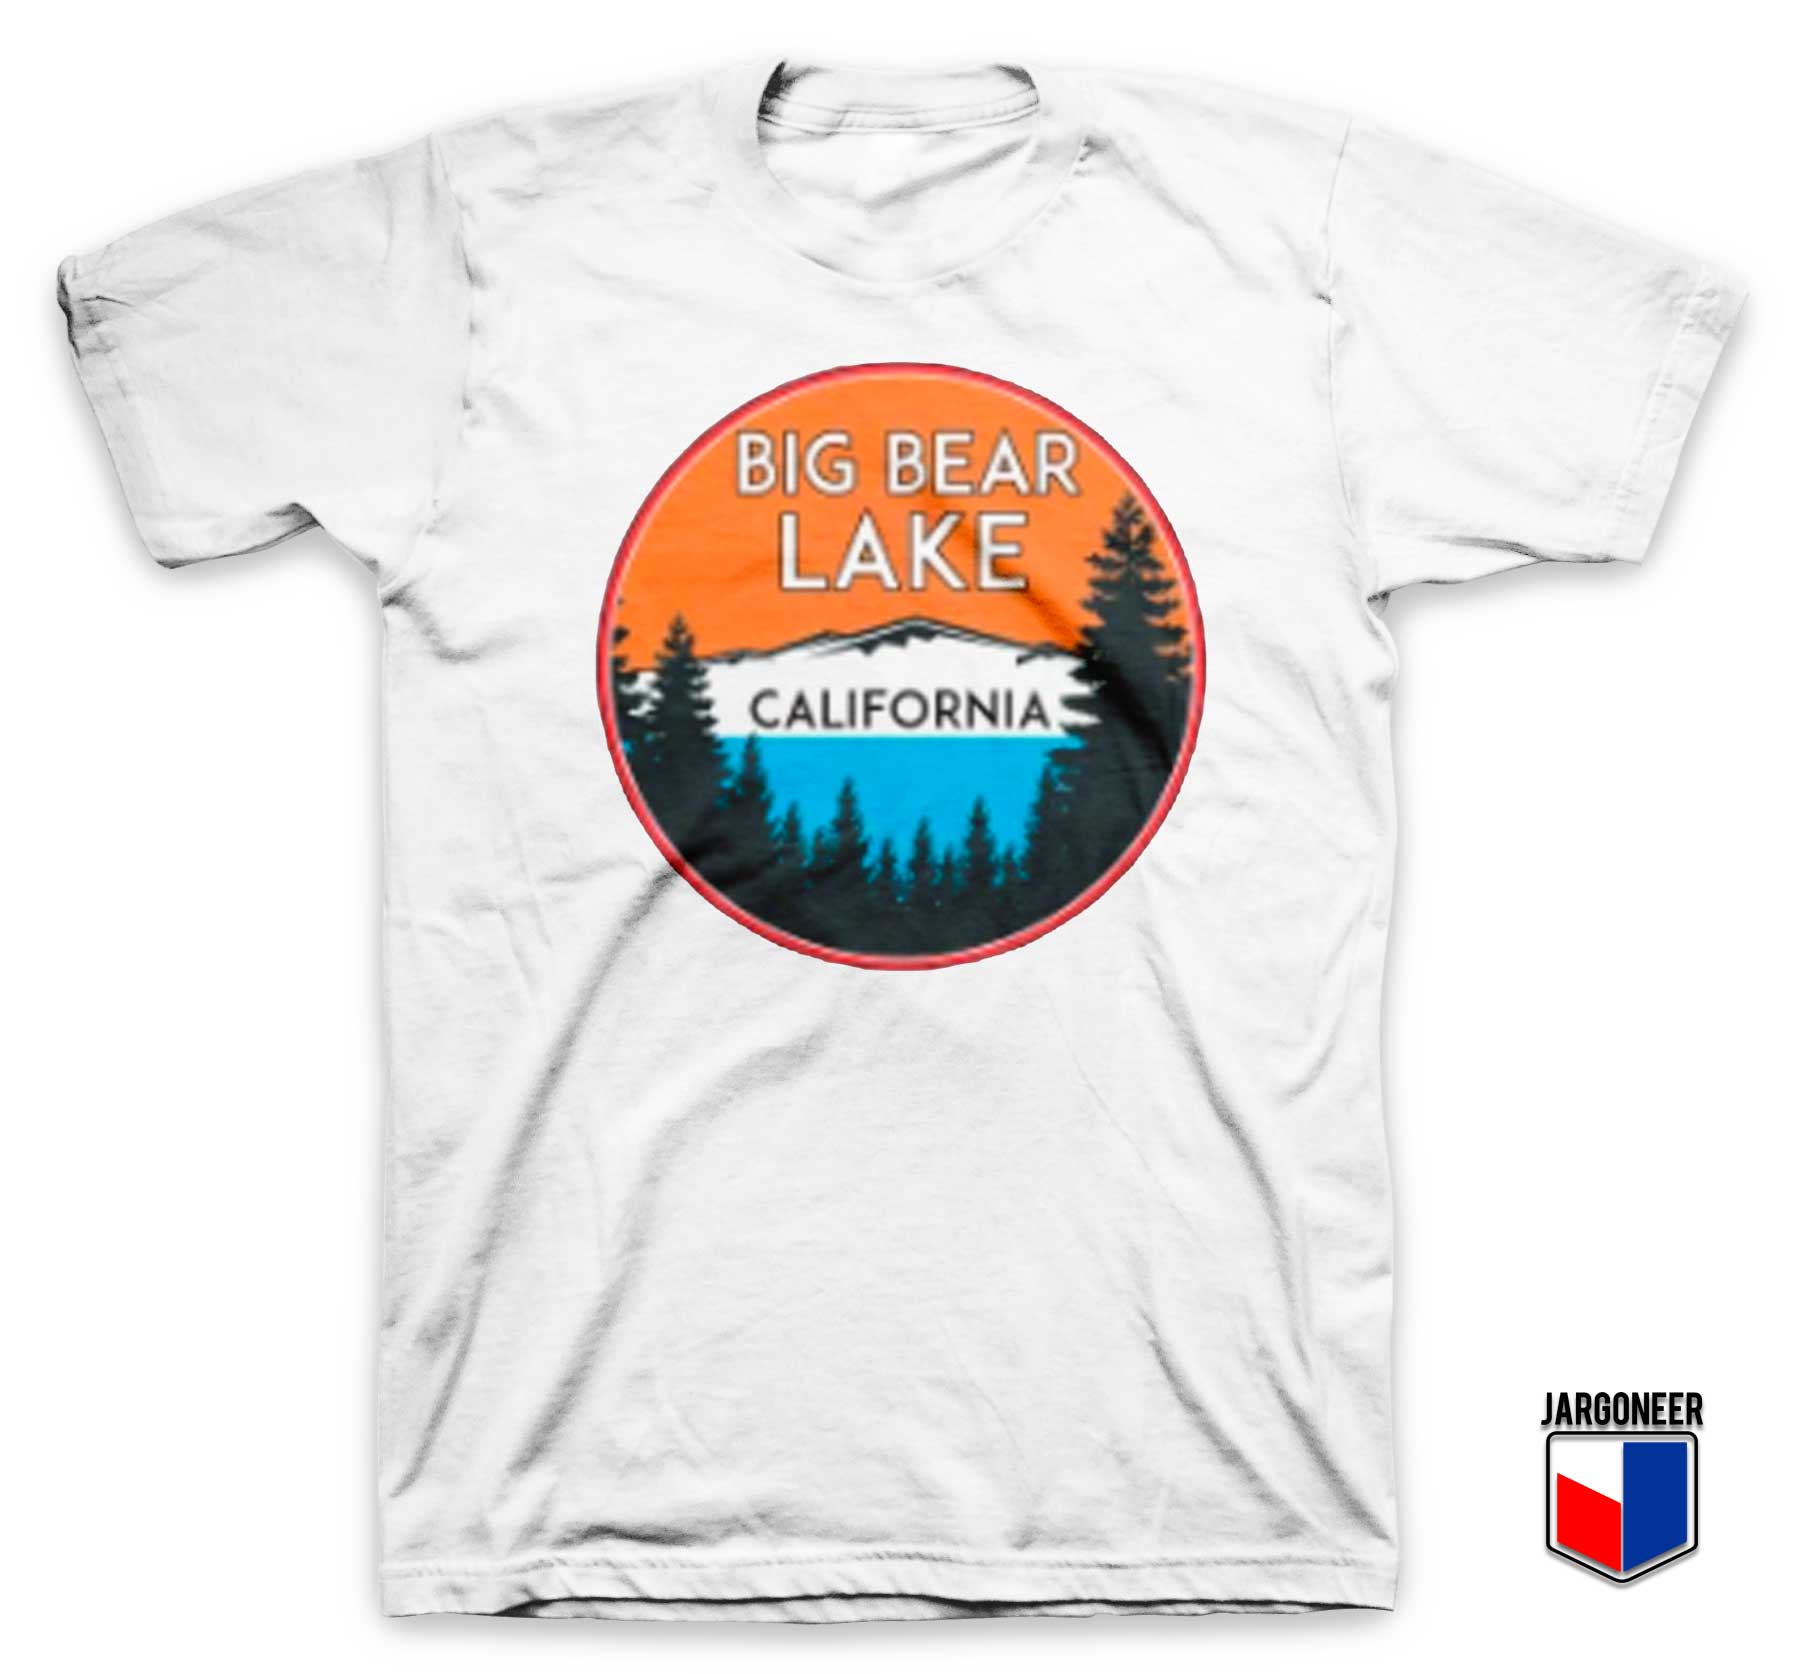 Big Bear Lake California T Shirt - Shop Unique Graphic Cool Shirt Designs